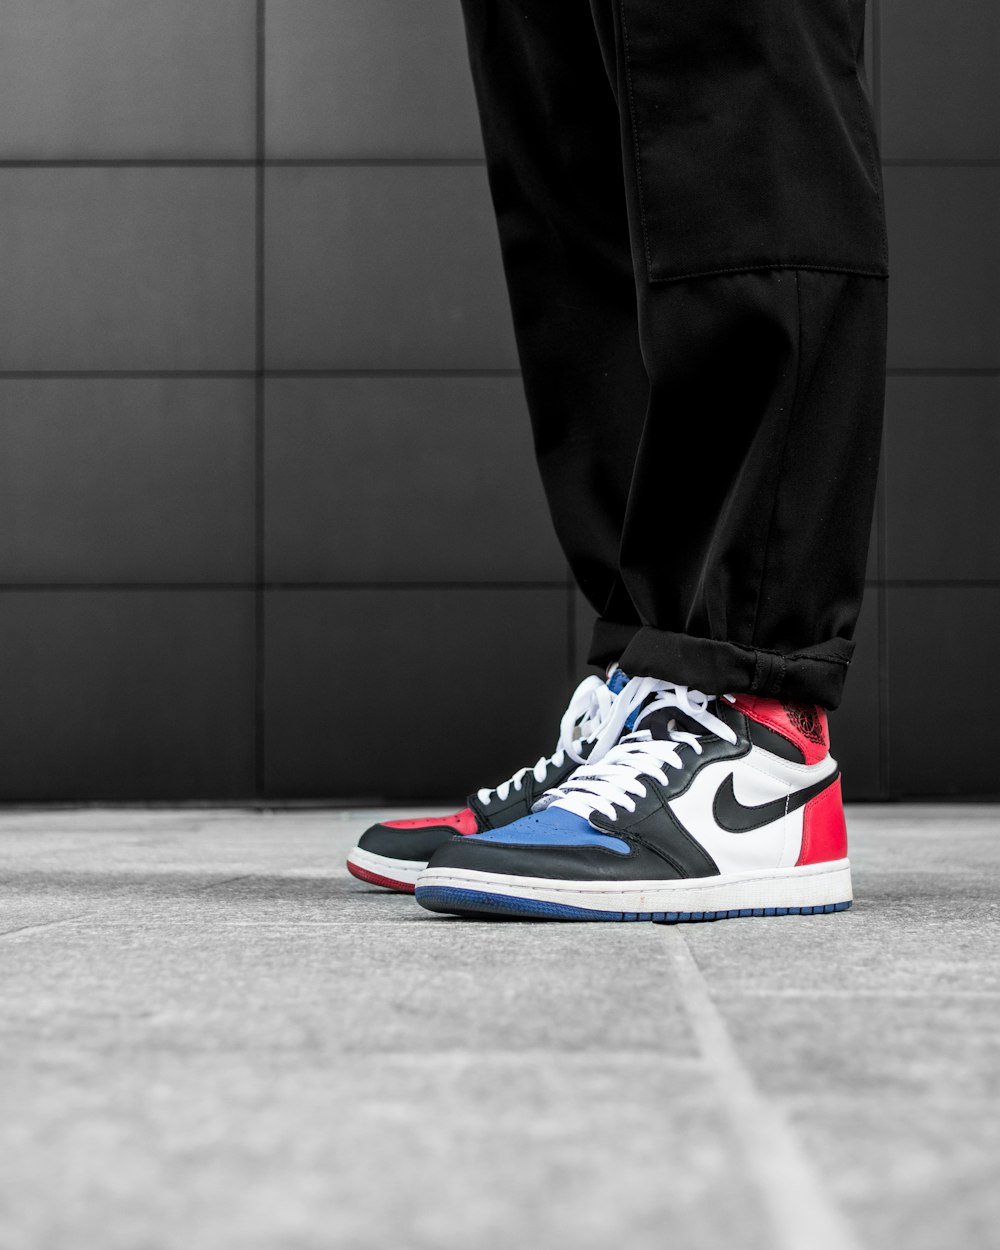 Man wears blue-red-and-black nike air jordan 1 shoes photo – Free Clothing  Image on Unsplash